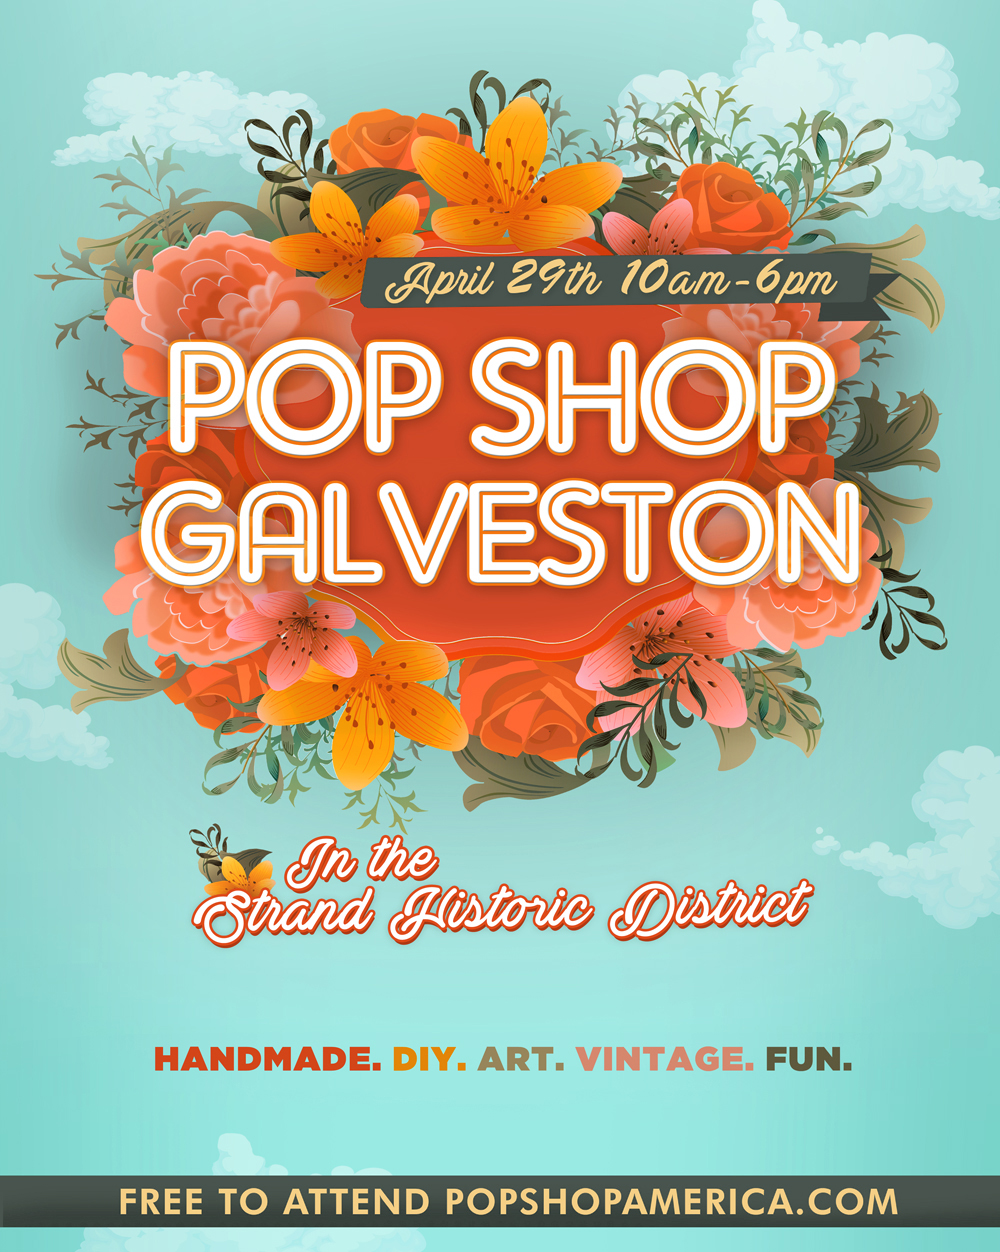 Pop Shop Galveston - A Modern & Stylish Art Market | Pop Shop America